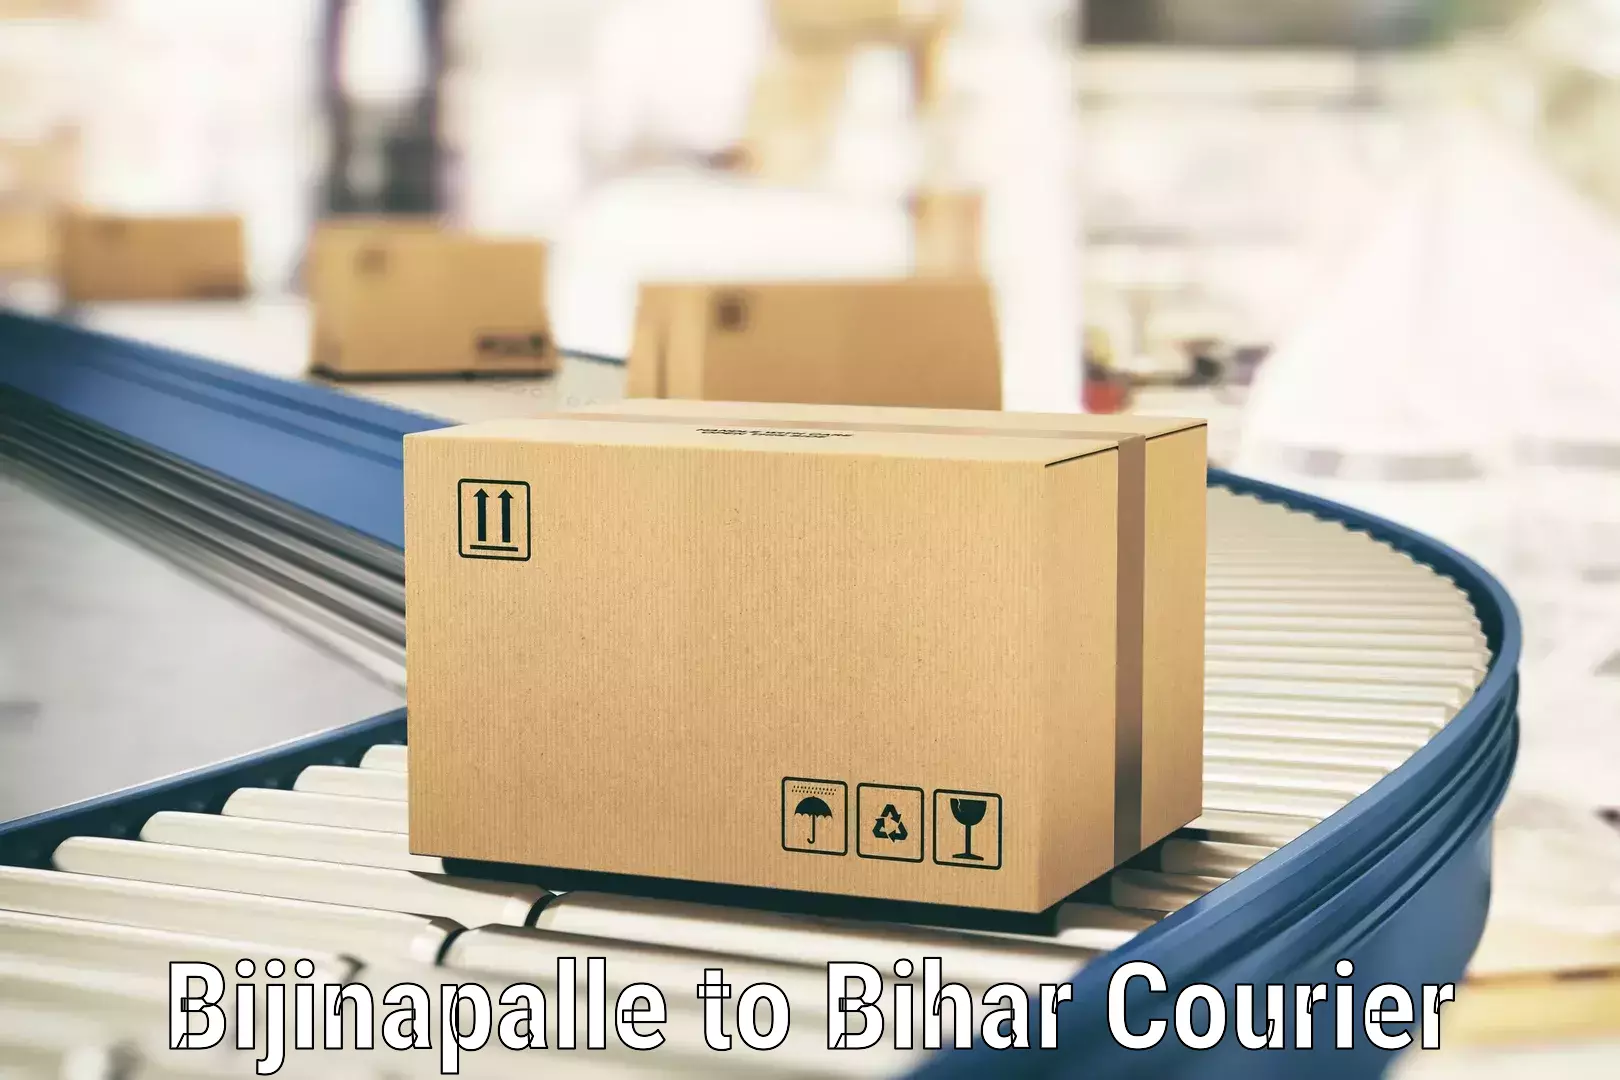 Courier app Bijinapalle to Maranga